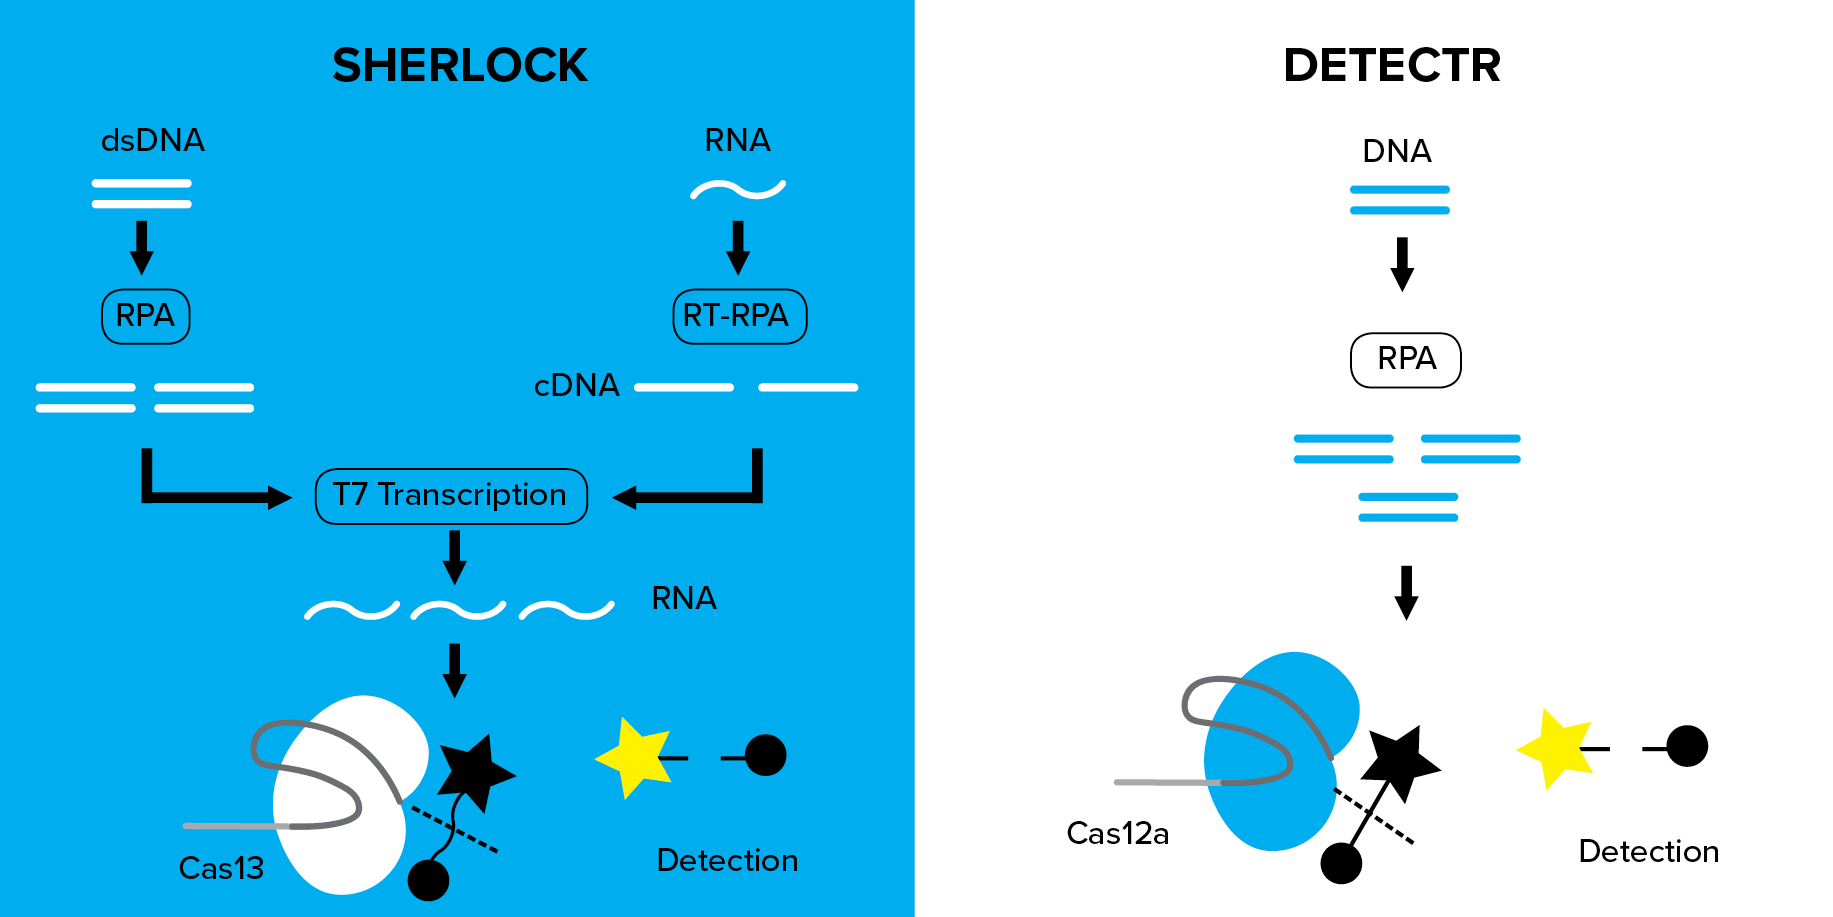 comparison between SHERLOCK and DETECTR nucleic acid detection methods